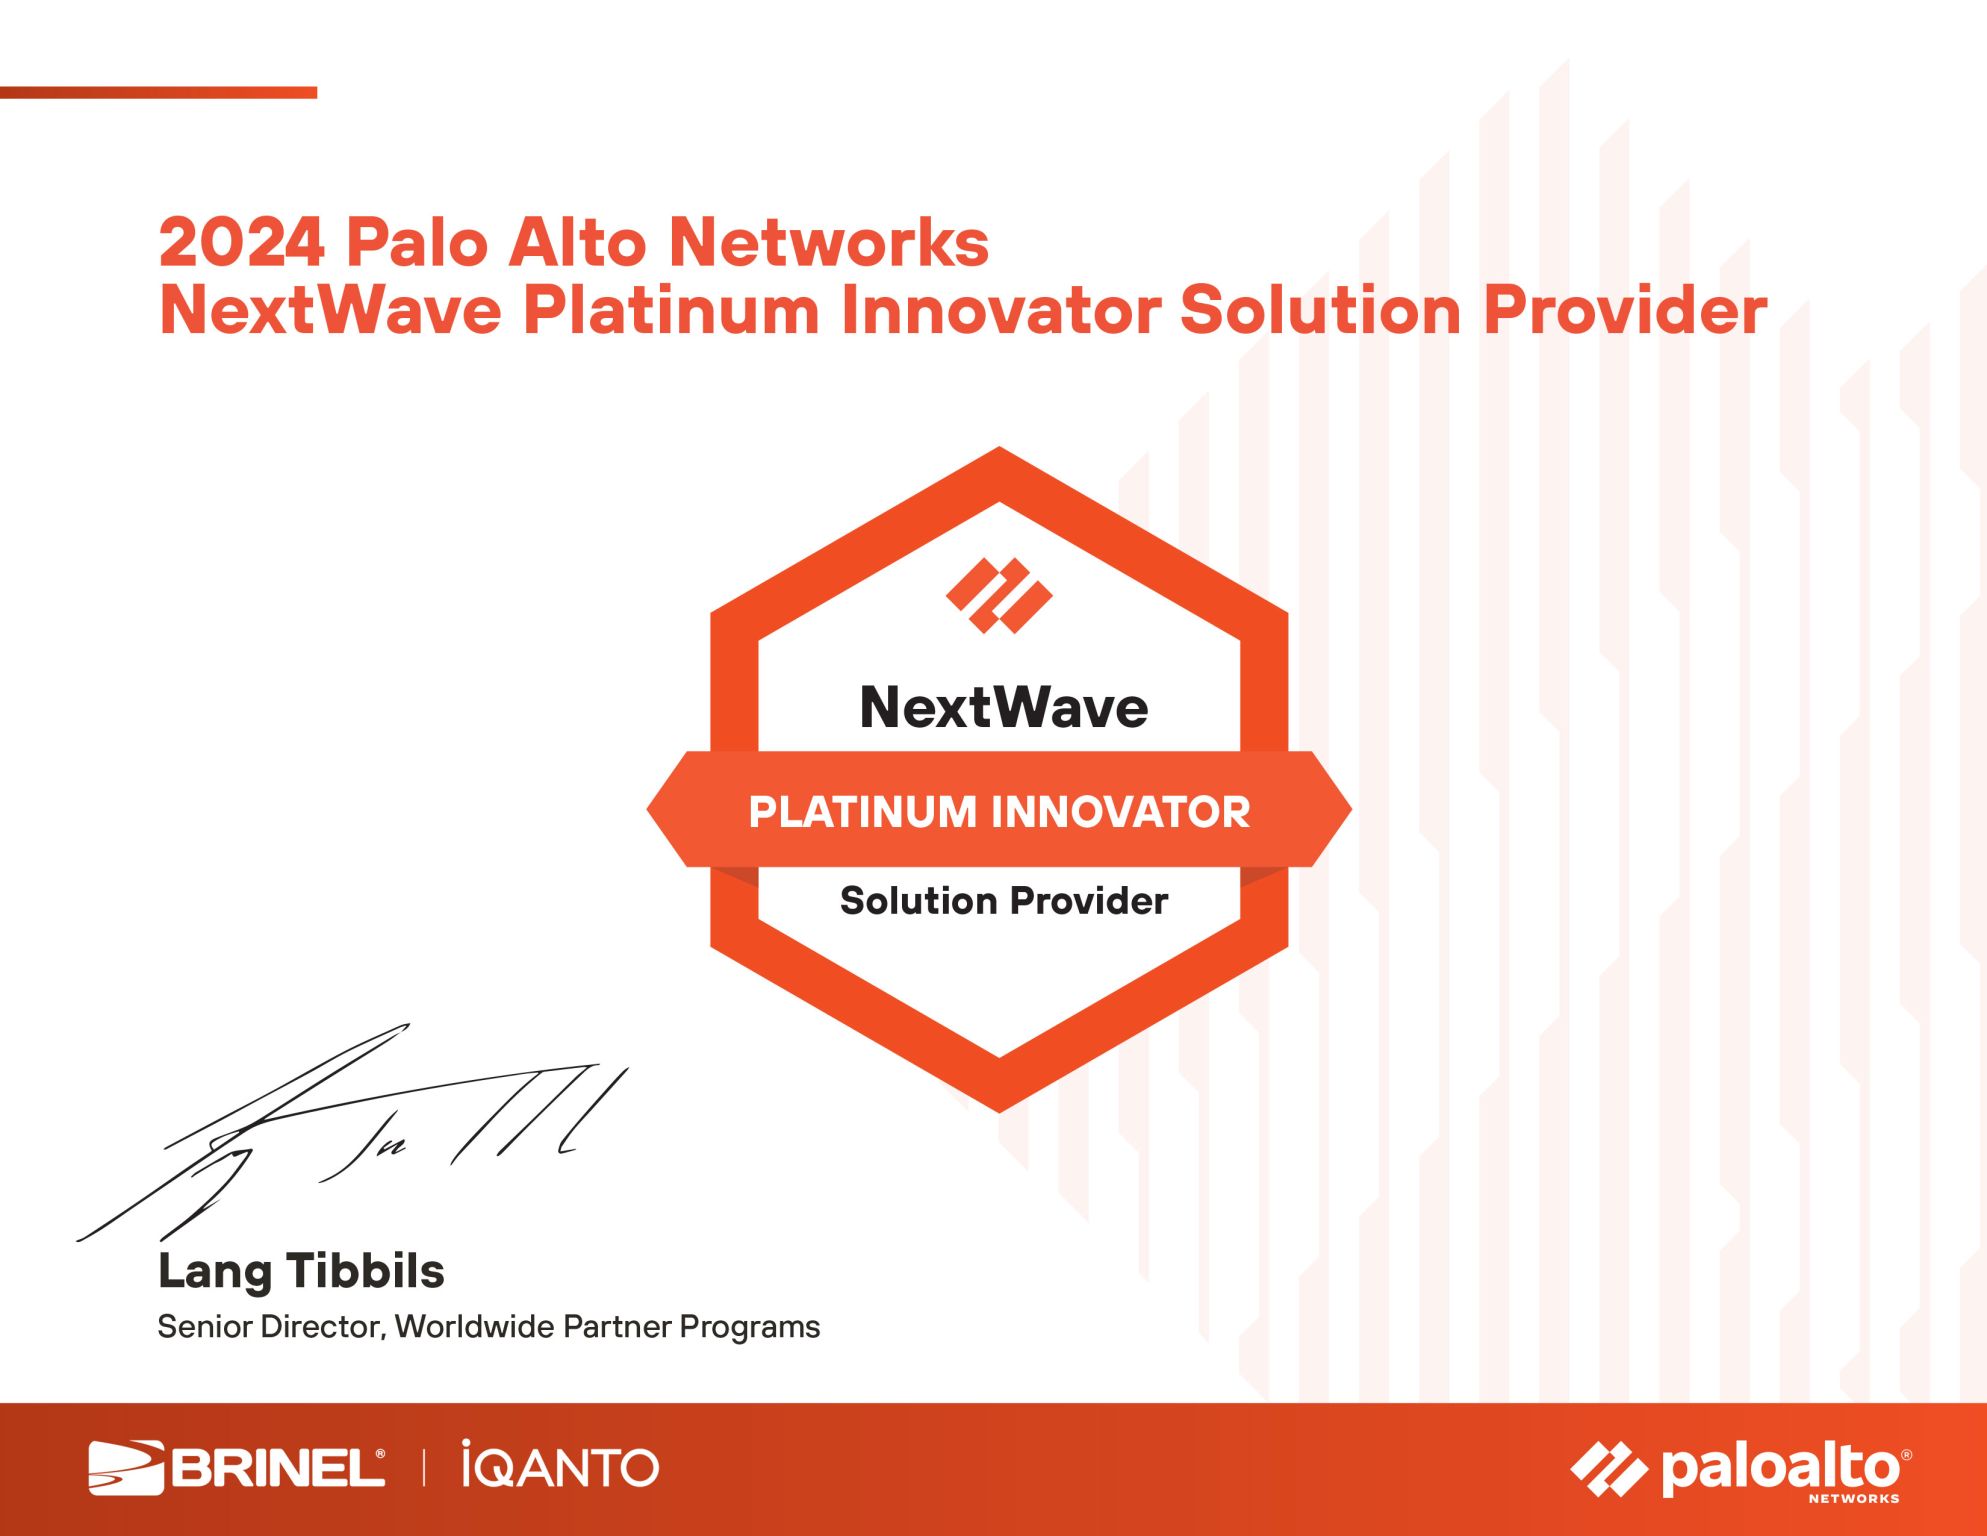 BRINEL devine Palo Alto NextWave Platinum Innovator Solution Provider